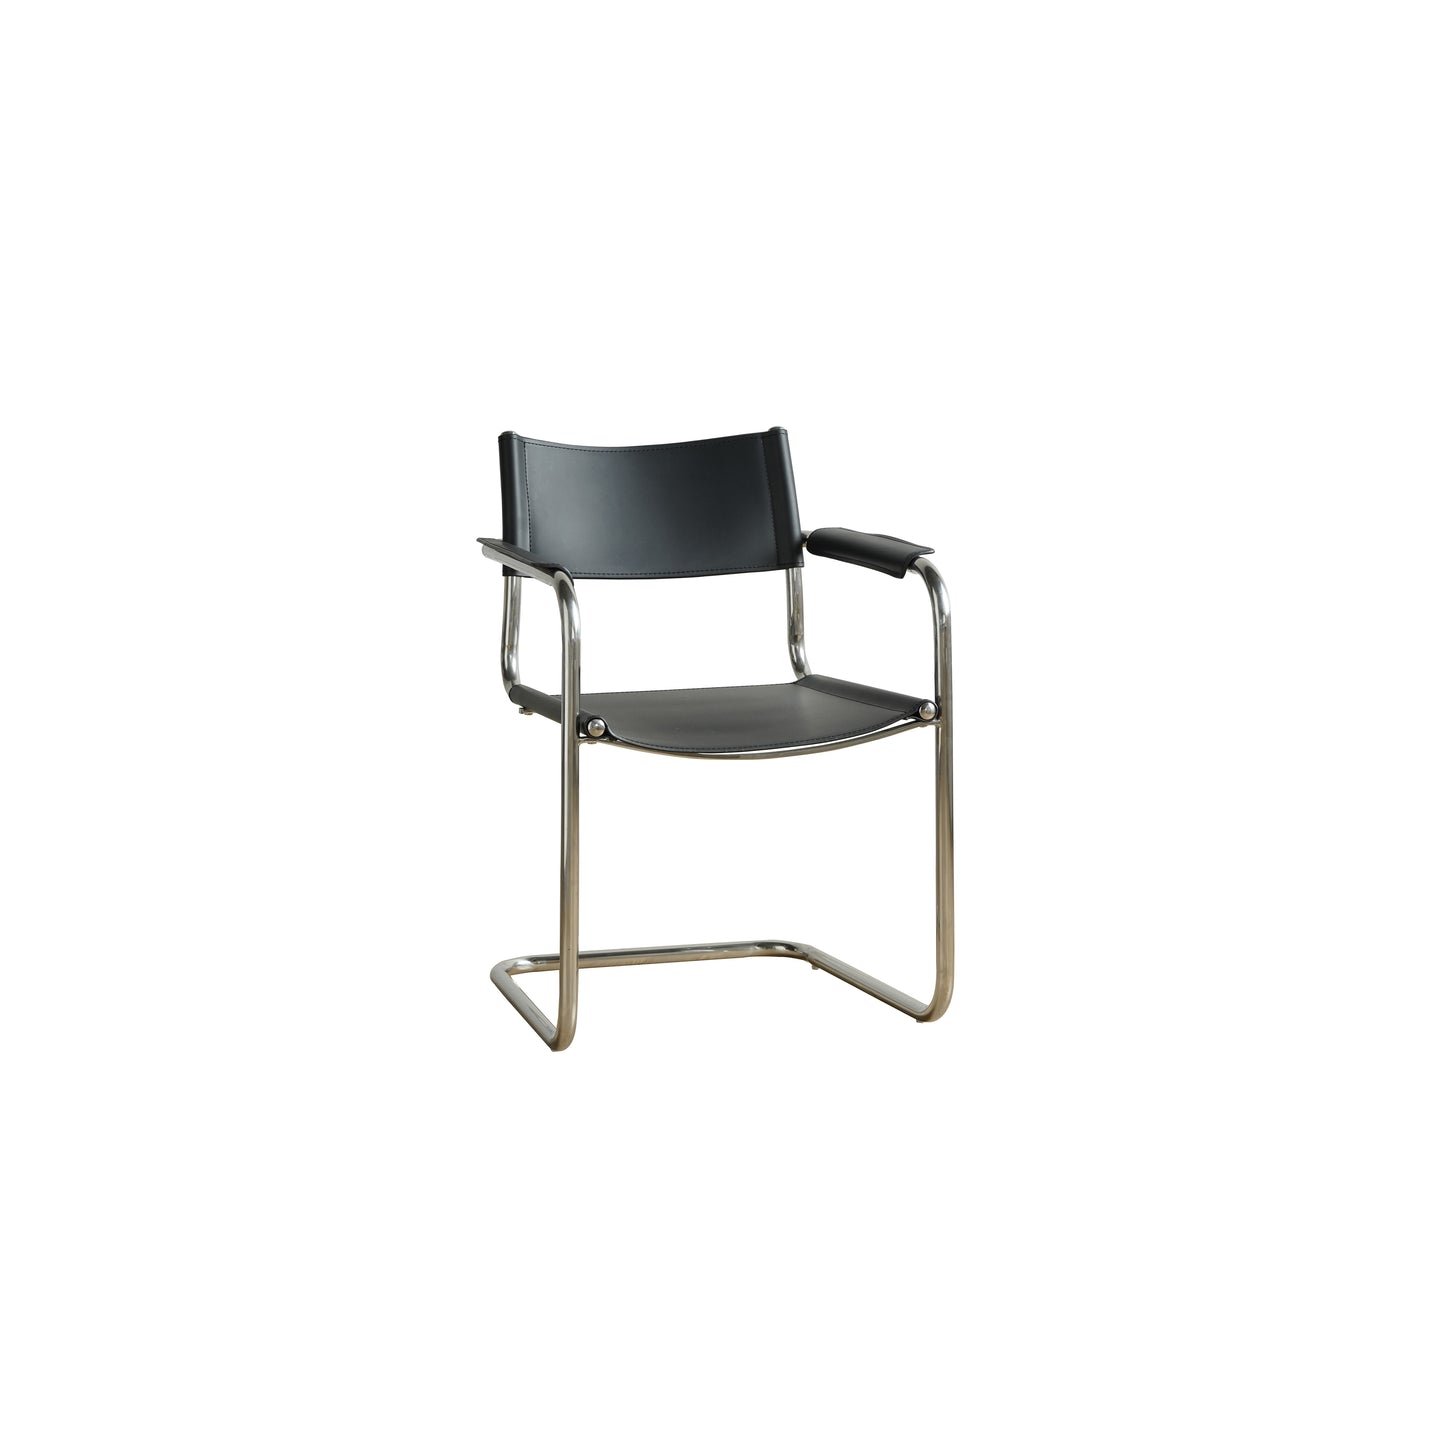 Stam Chair 4019